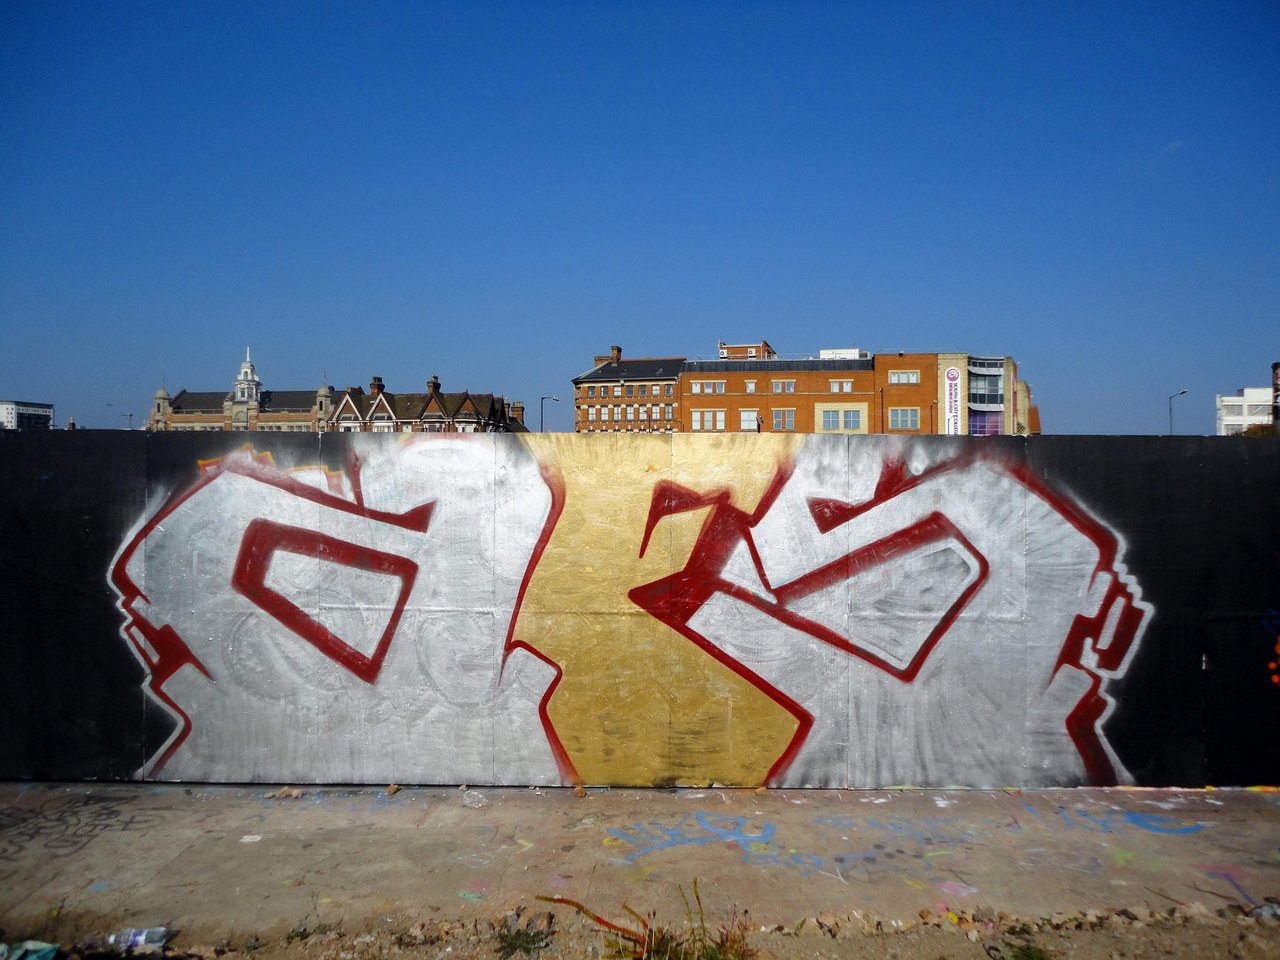 BIG dubs from AFS

#graffiti #graff #Digbeth #streetart #mural #art #arte #chrome http://t.co/TBlmhPJwuB